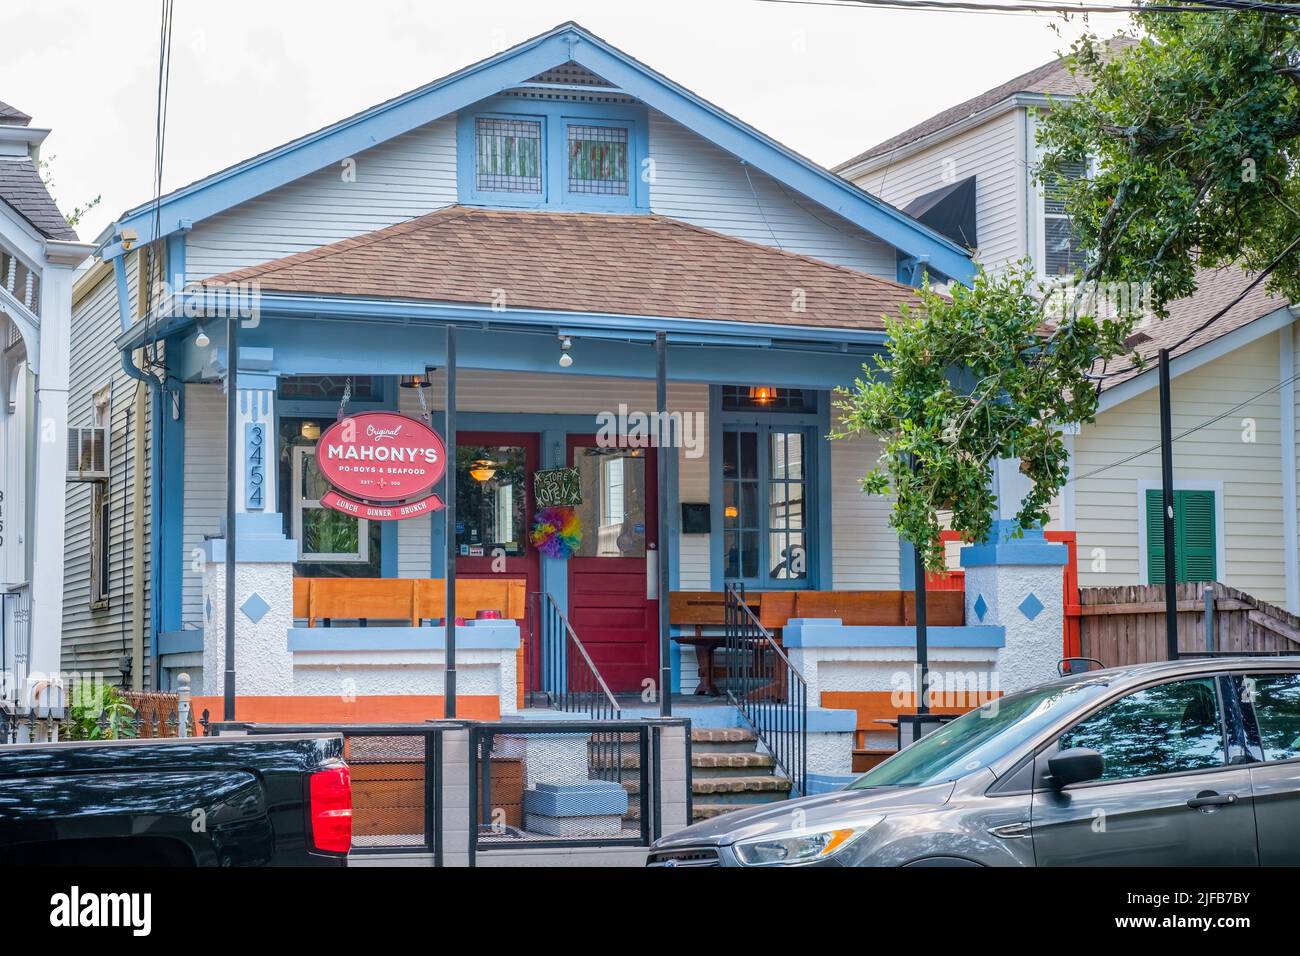 NEW ORLEANS, LA, USA - JUNE 22, 2022: Popular Mahony's Po-boys and Seafood Restaurant on Magazine Street Stock Photo